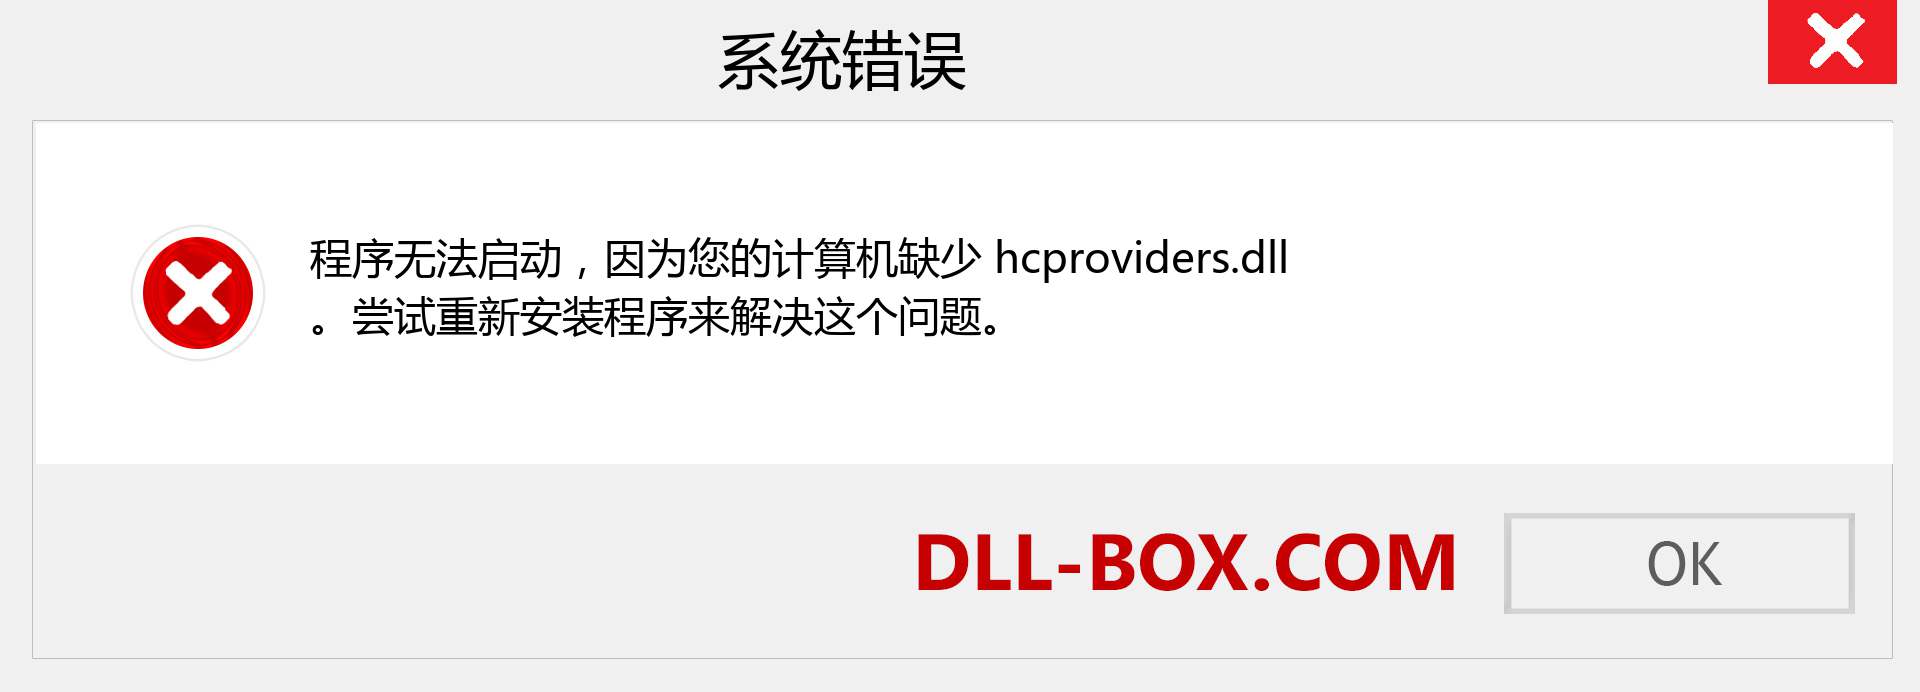 hcproviders.dll 文件丢失？。 适用于 Windows 7、8、10 的下载 - 修复 Windows、照片、图像上的 hcproviders dll 丢失错误